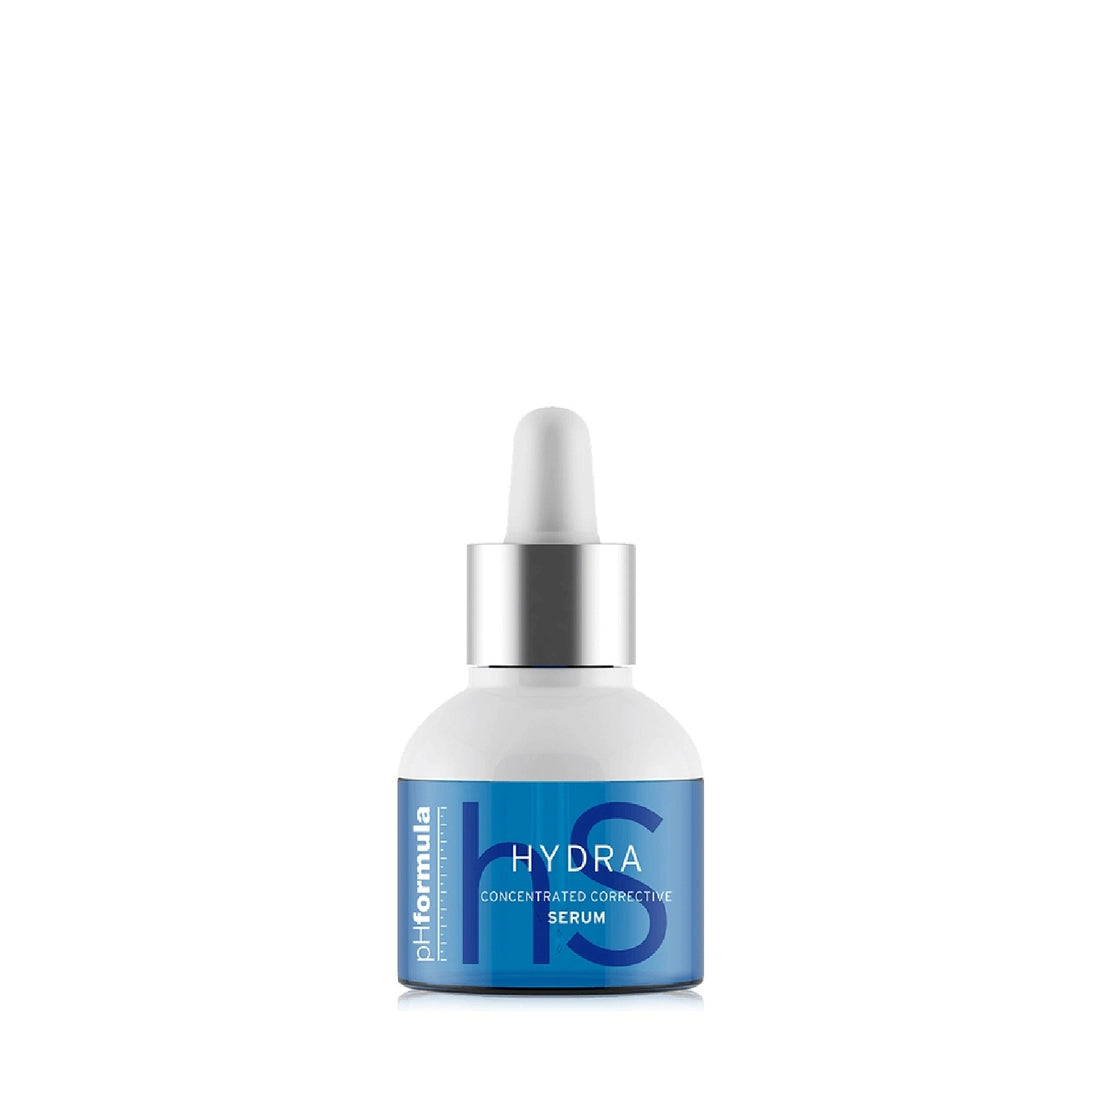 pHformula HYDRA concentrated corrective serum 30ml